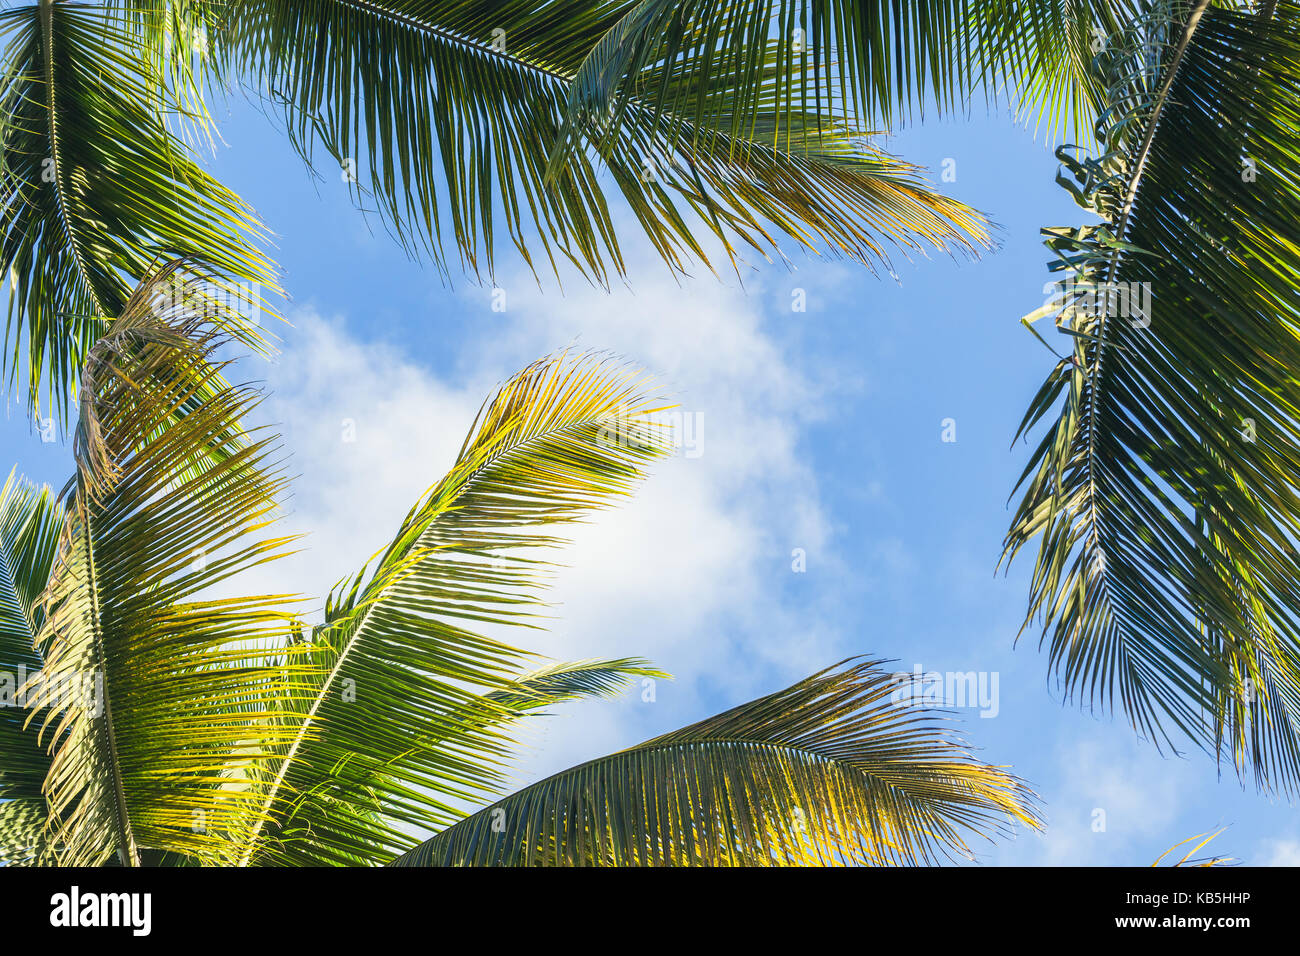 Kokosnuss Palmen Blätter über blauen bewölkten Himmel Hintergrund Stockfoto